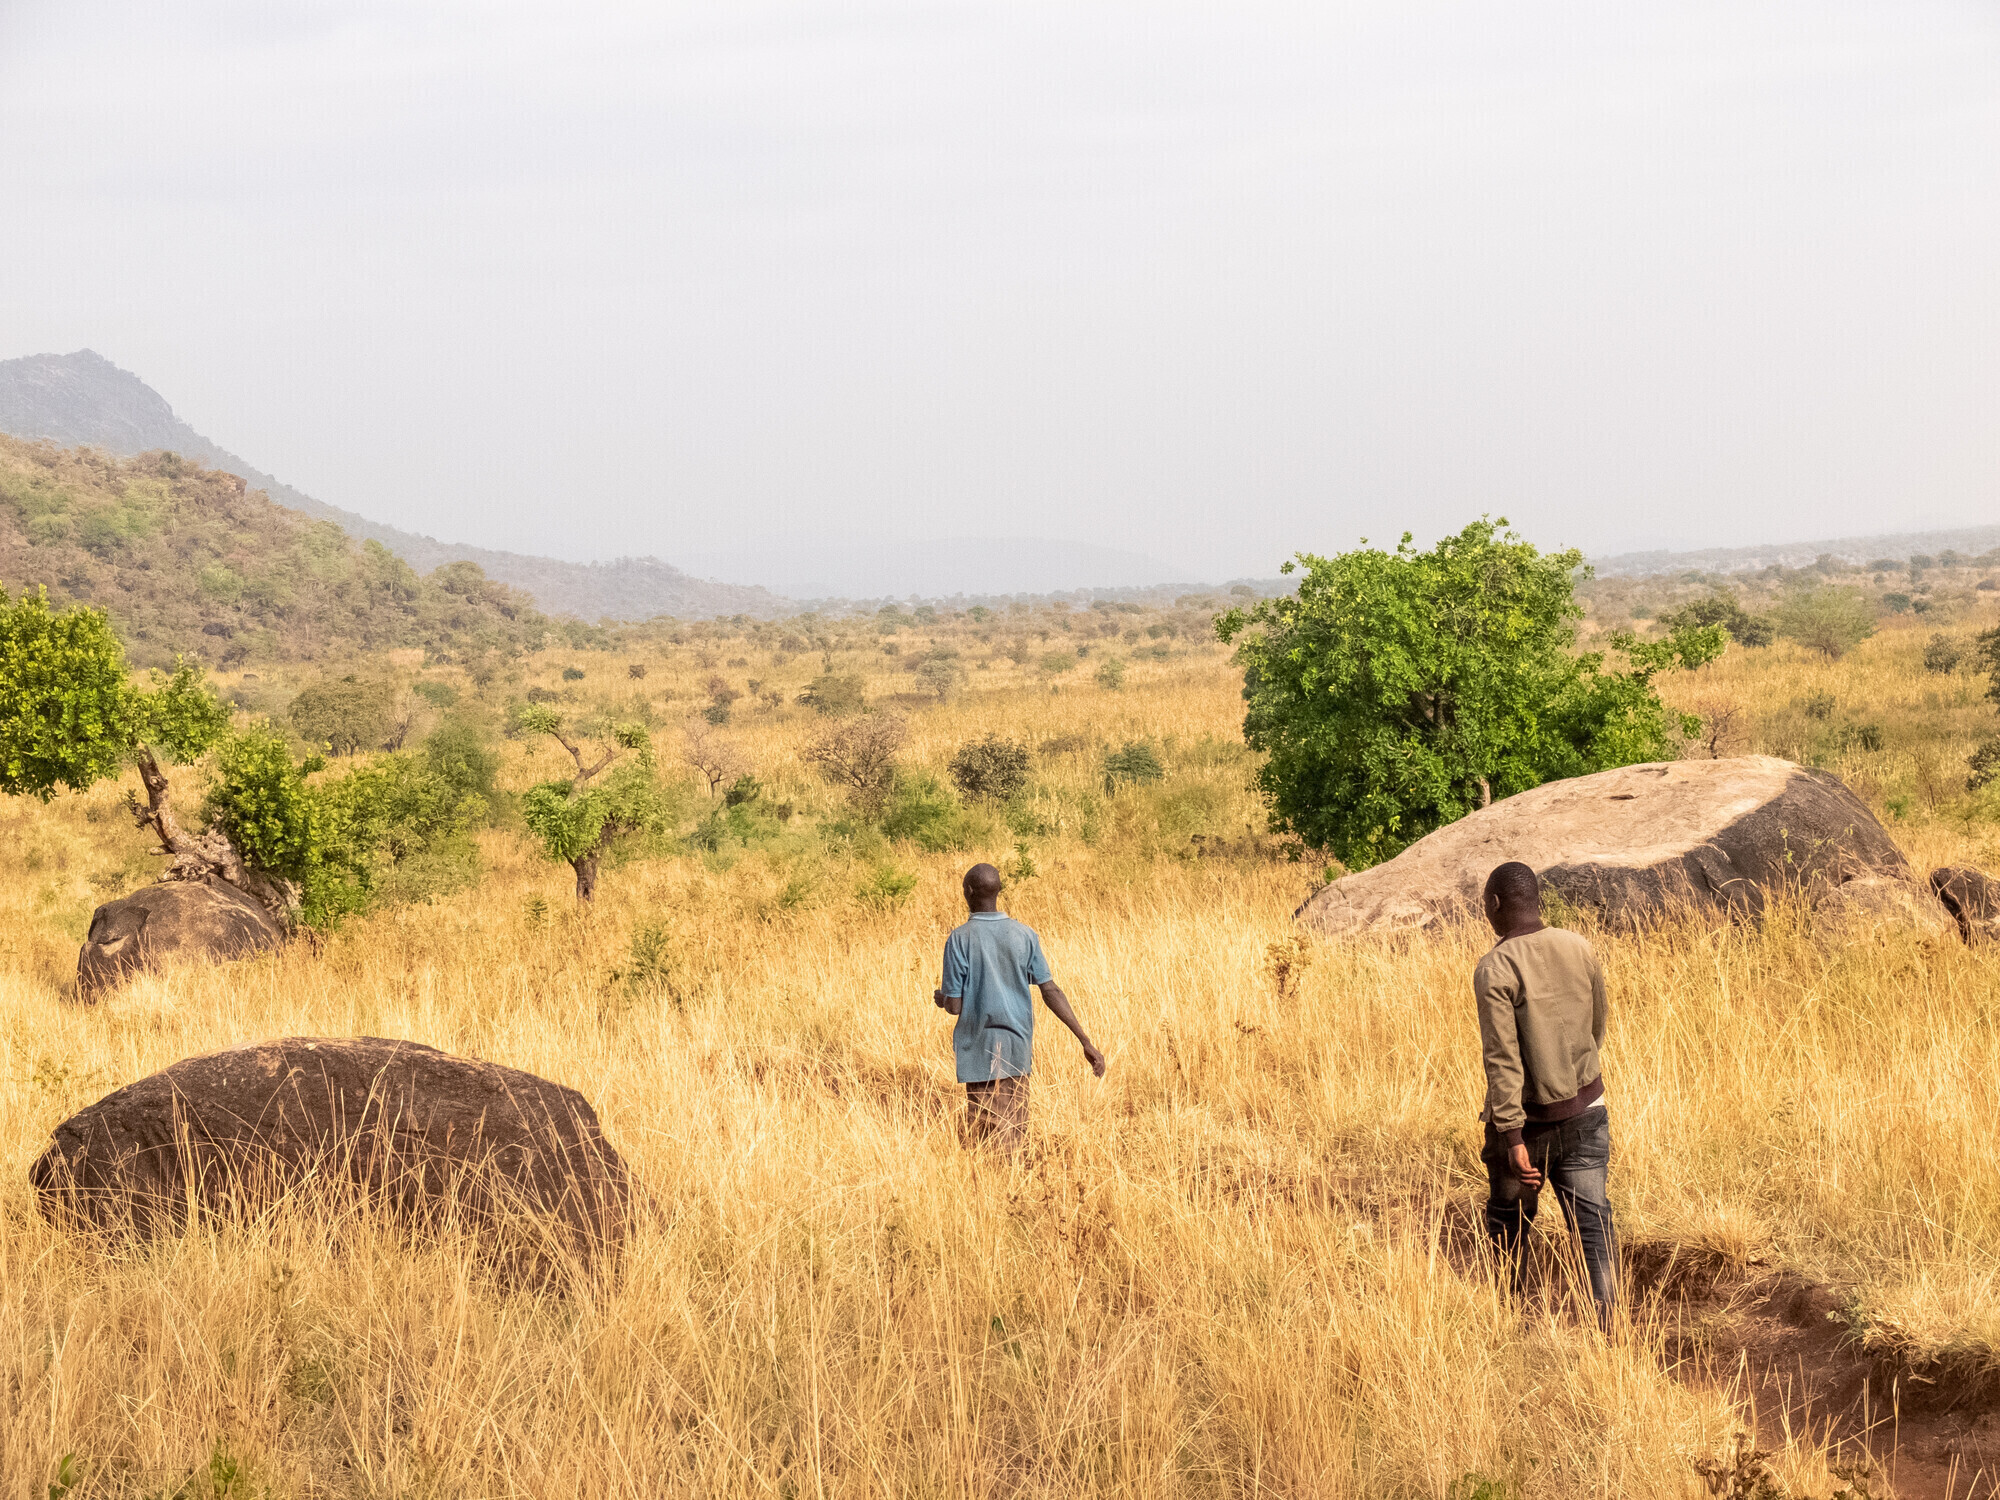 farmer walking through dry grass in Uganda